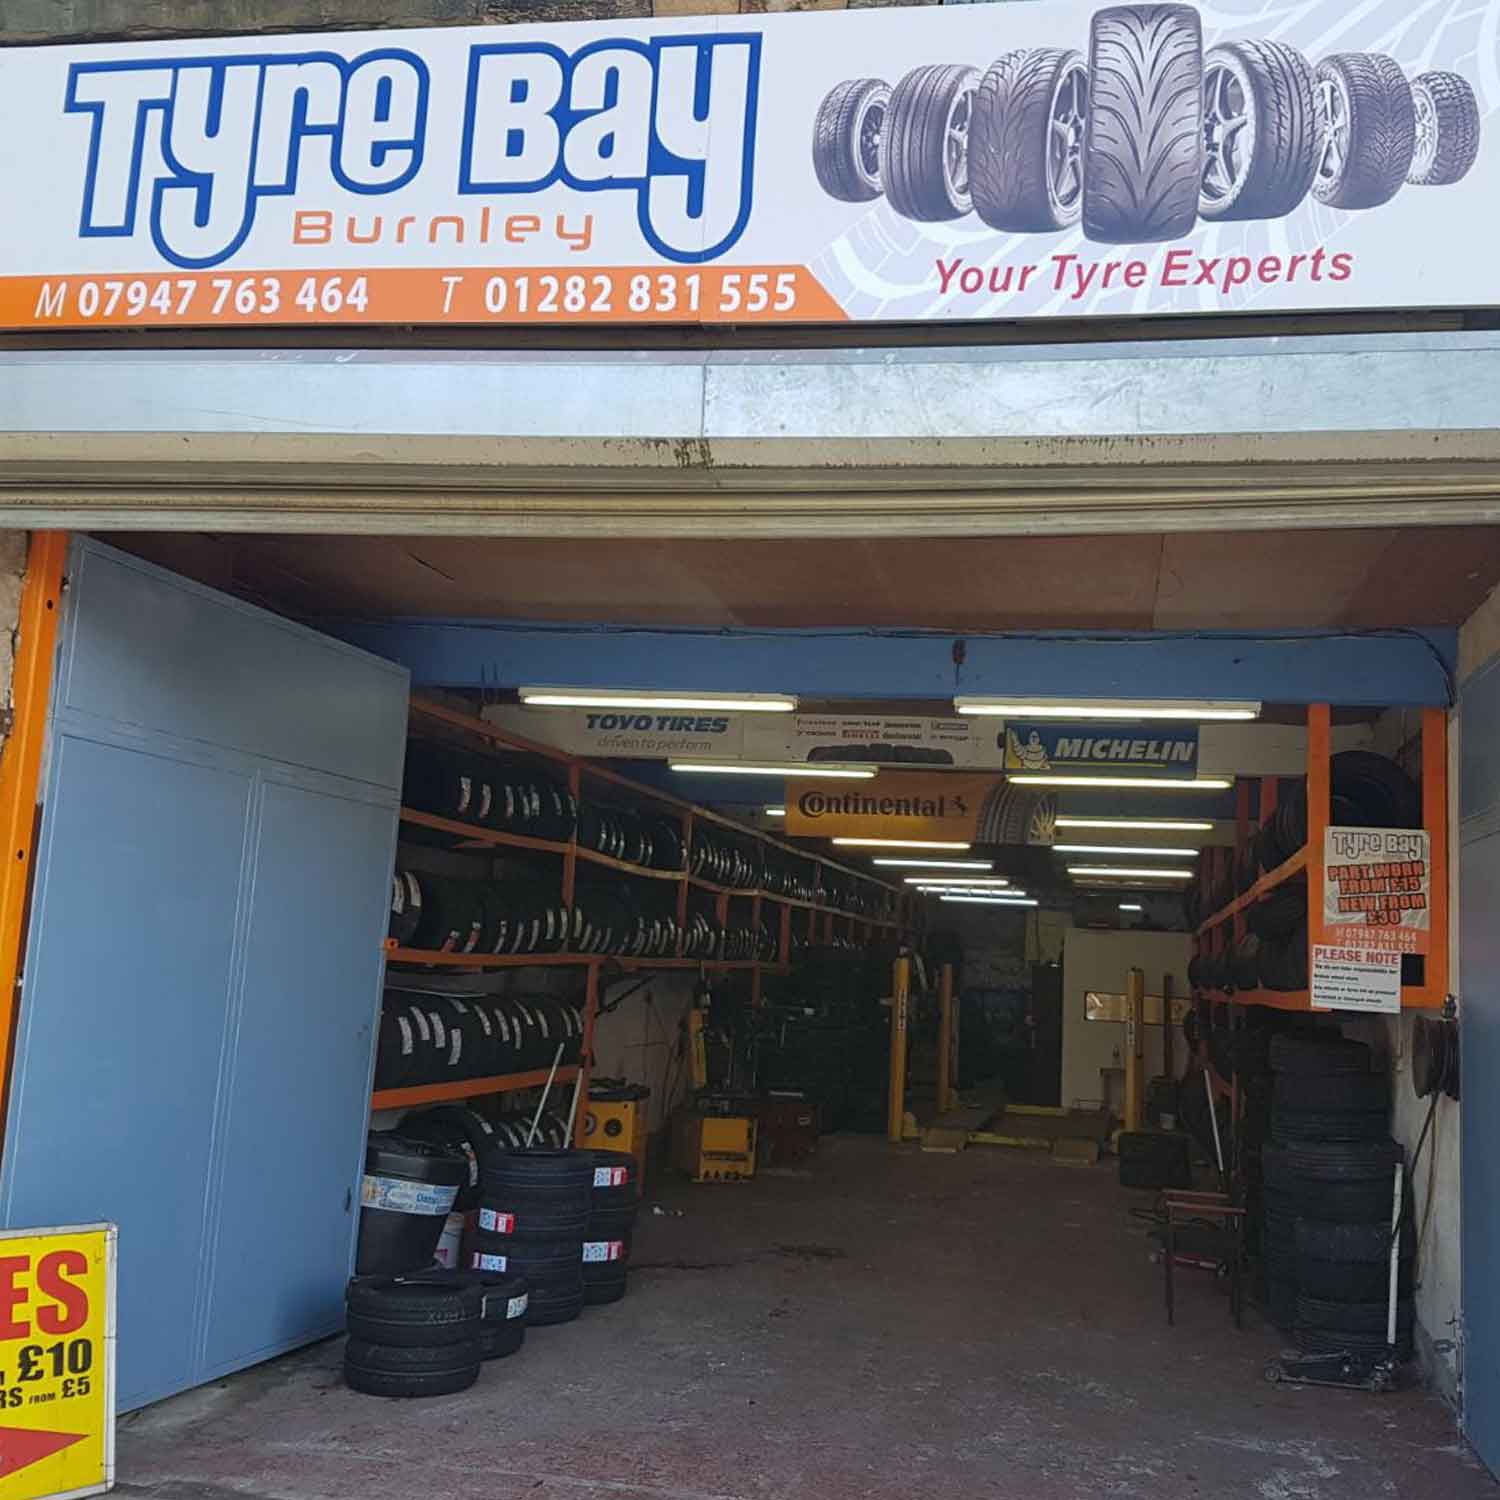 Tyre Bay Burnley Garage